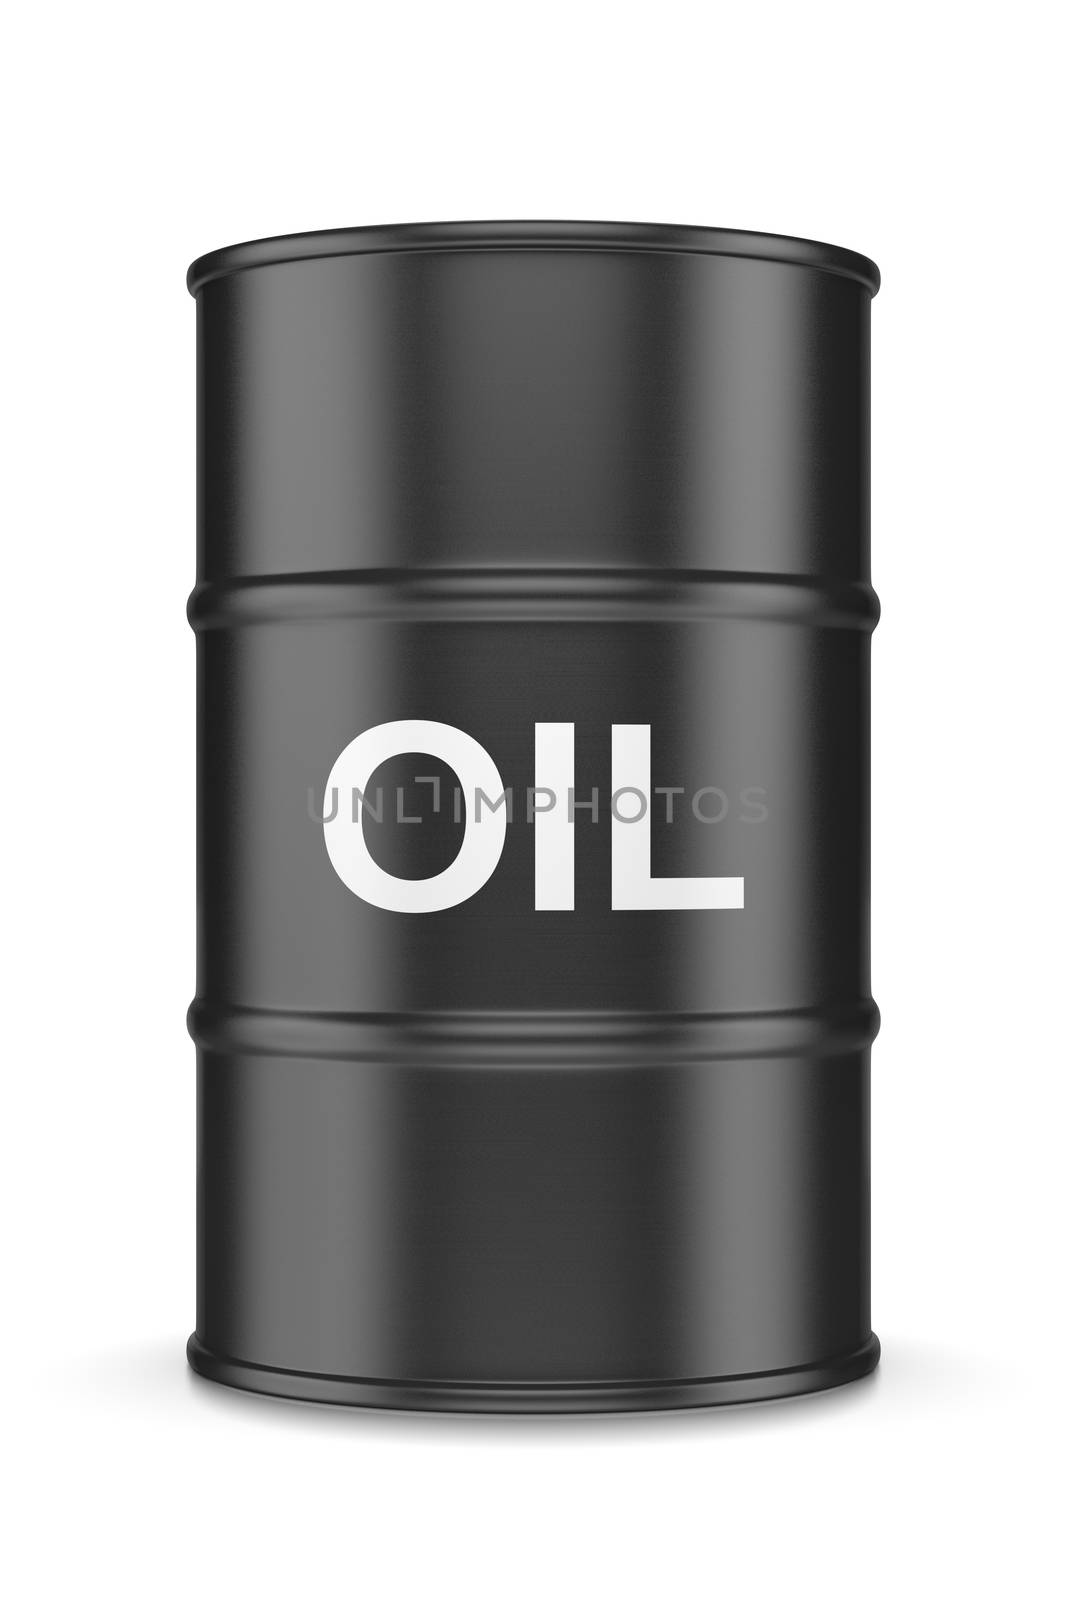 Single Black Oil Barrel on White Background 3D Illustration